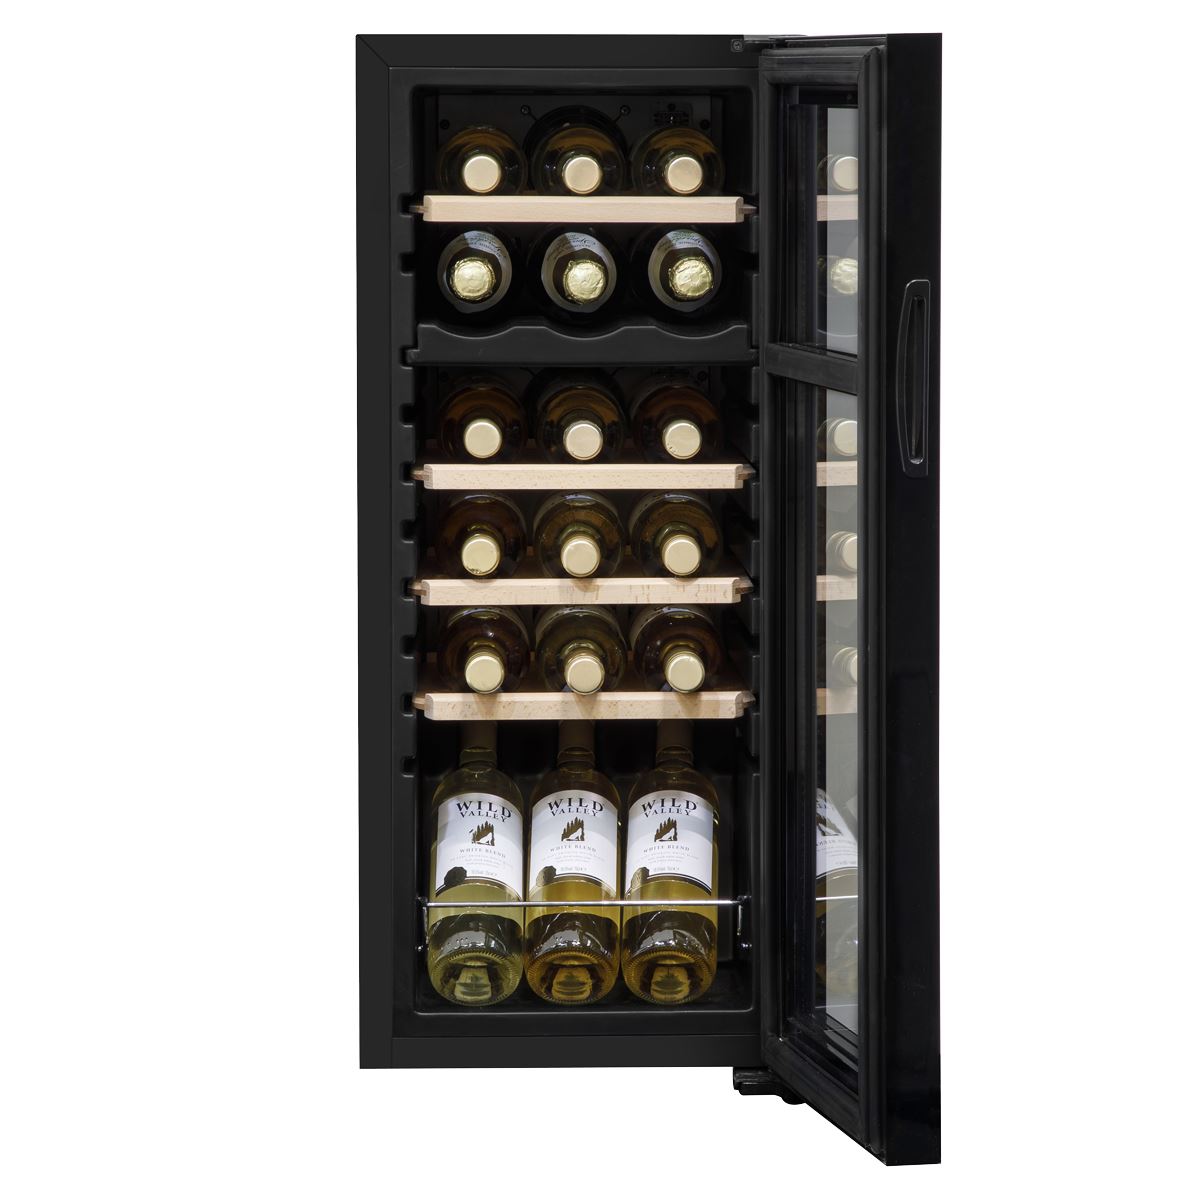 Baridi 18 Bottle Dual Zone Wine Cooler, Fridge with Digital Touchscreen Controls, Wooden Shelves & LED Light, Black